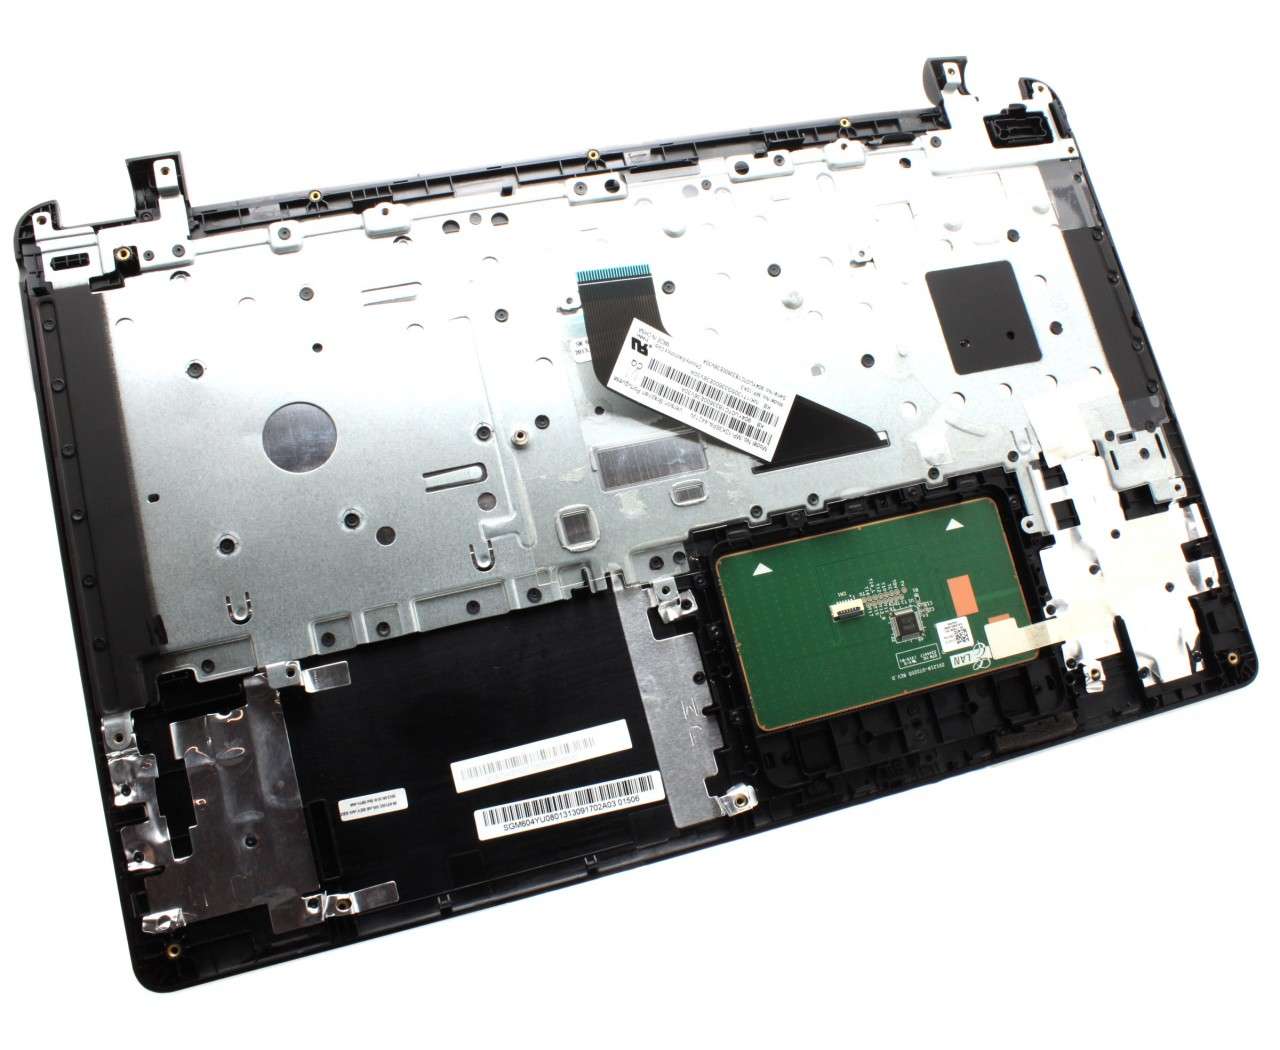 Tastatura Acer Aspire E1-530 Neagra cu Palmrest Negru si TouchPad (Neagra) (Neagra)